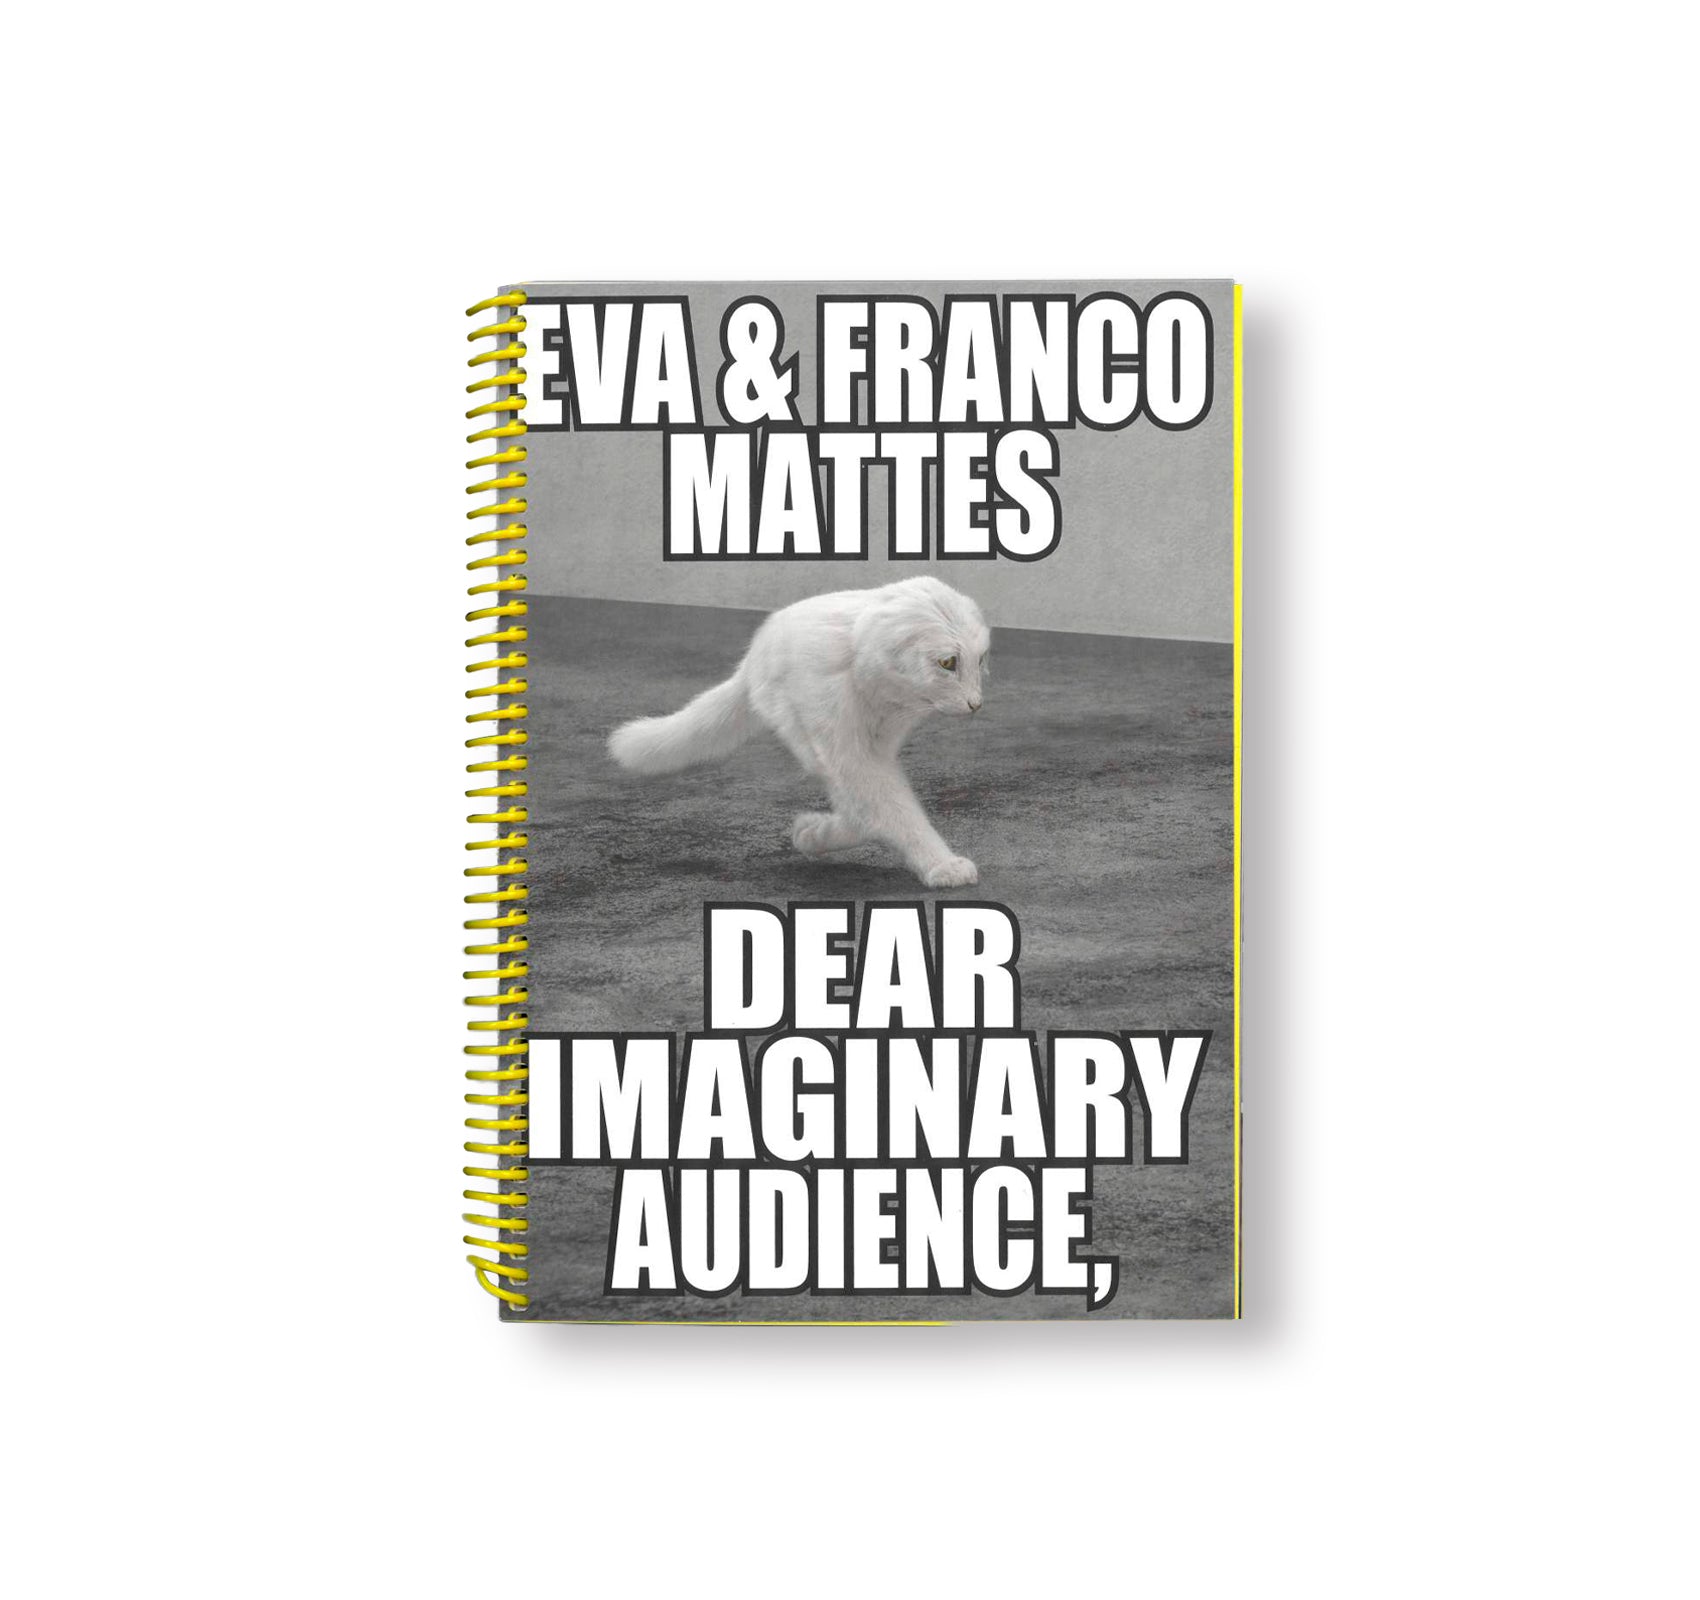 DEAR IMAGINARY AUDIENCE by Eva & Franco Mattes